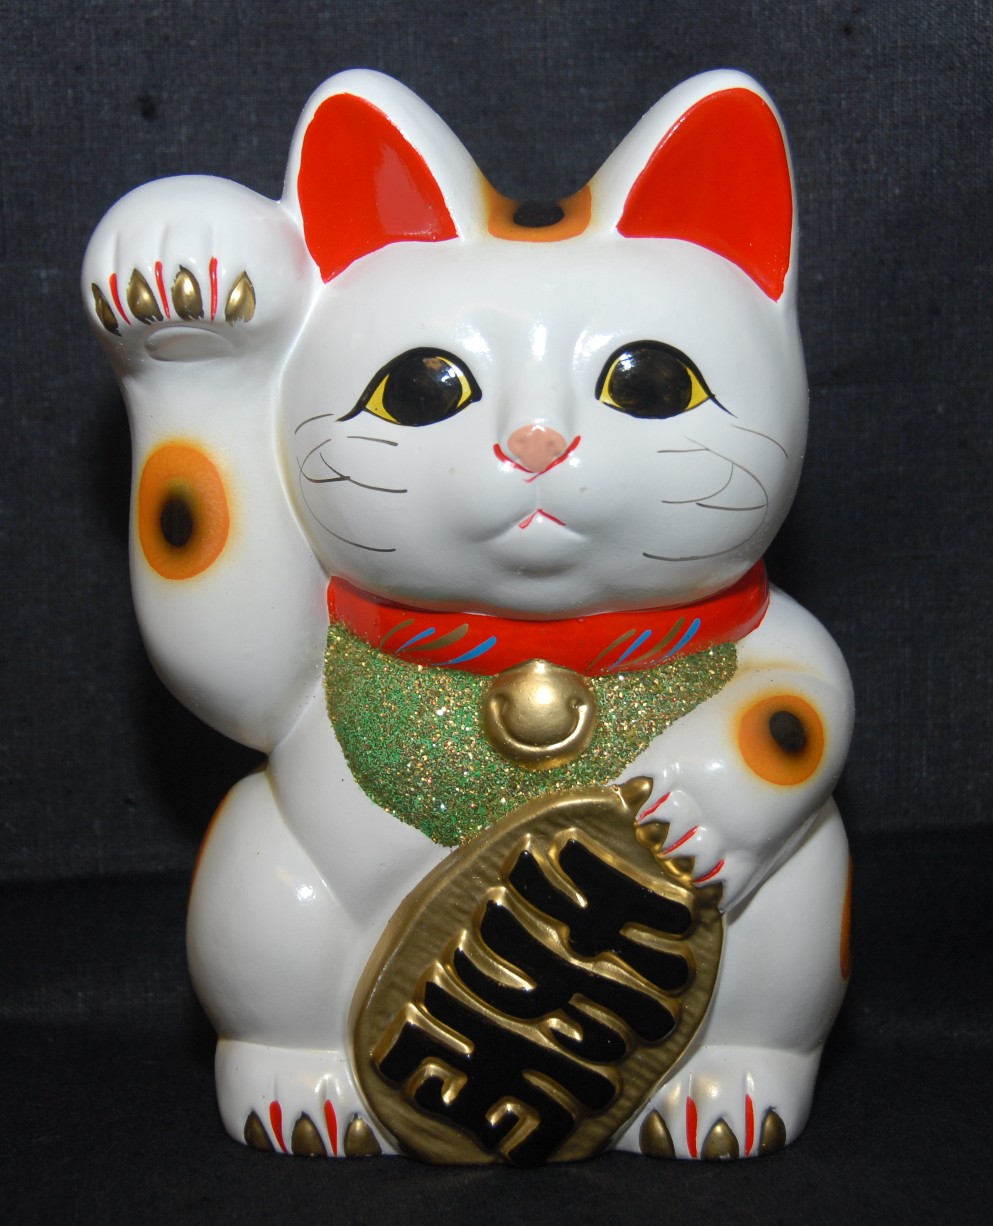 Chinese Prosperity Cat